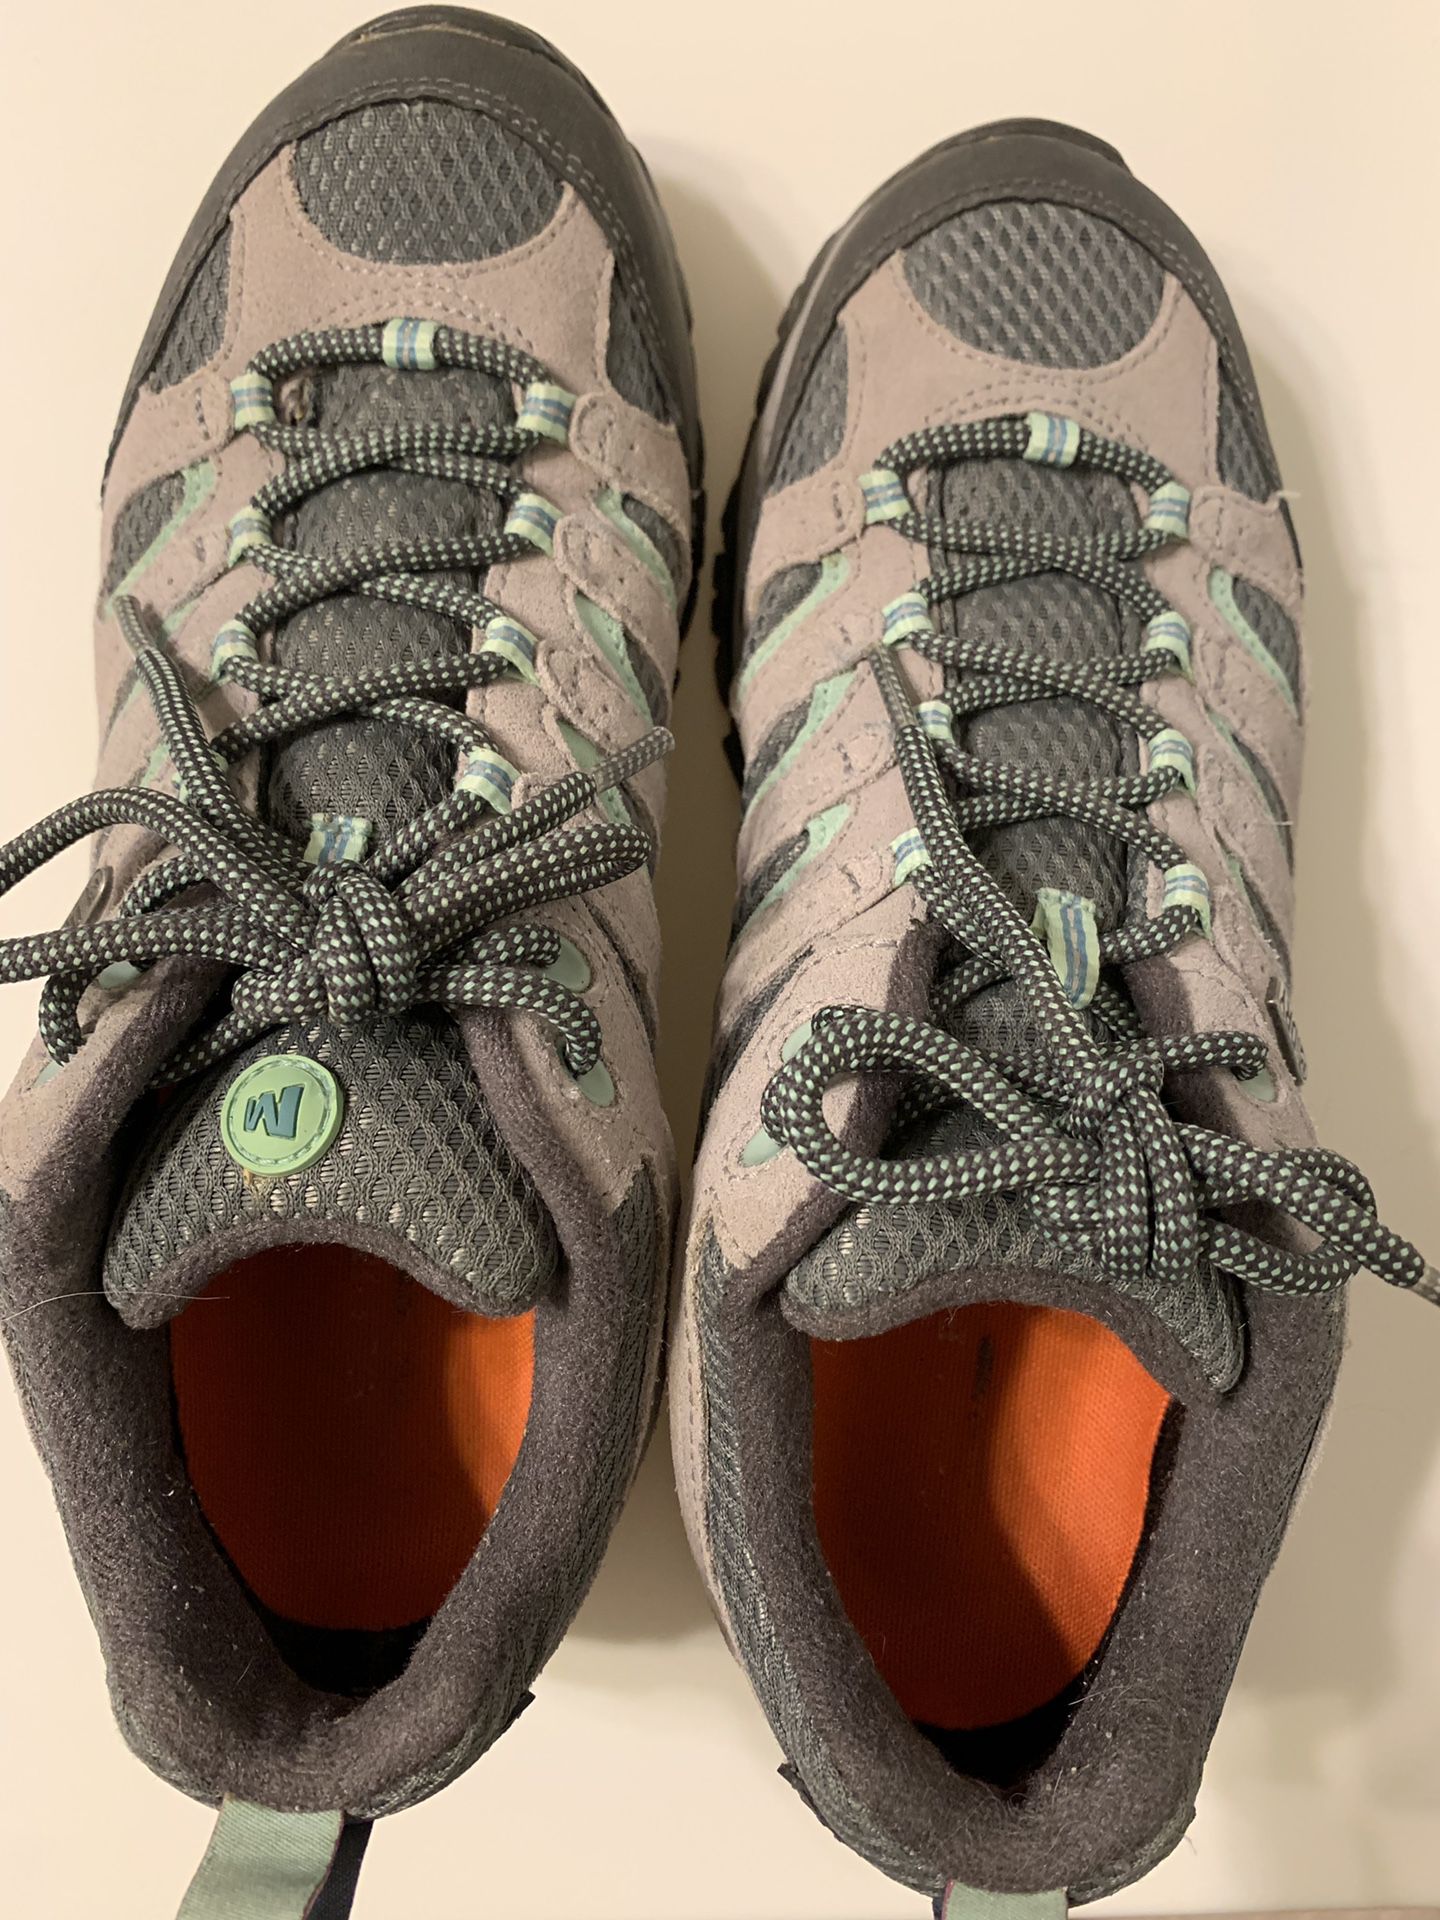 Merrell hiking women’s shoes size 9